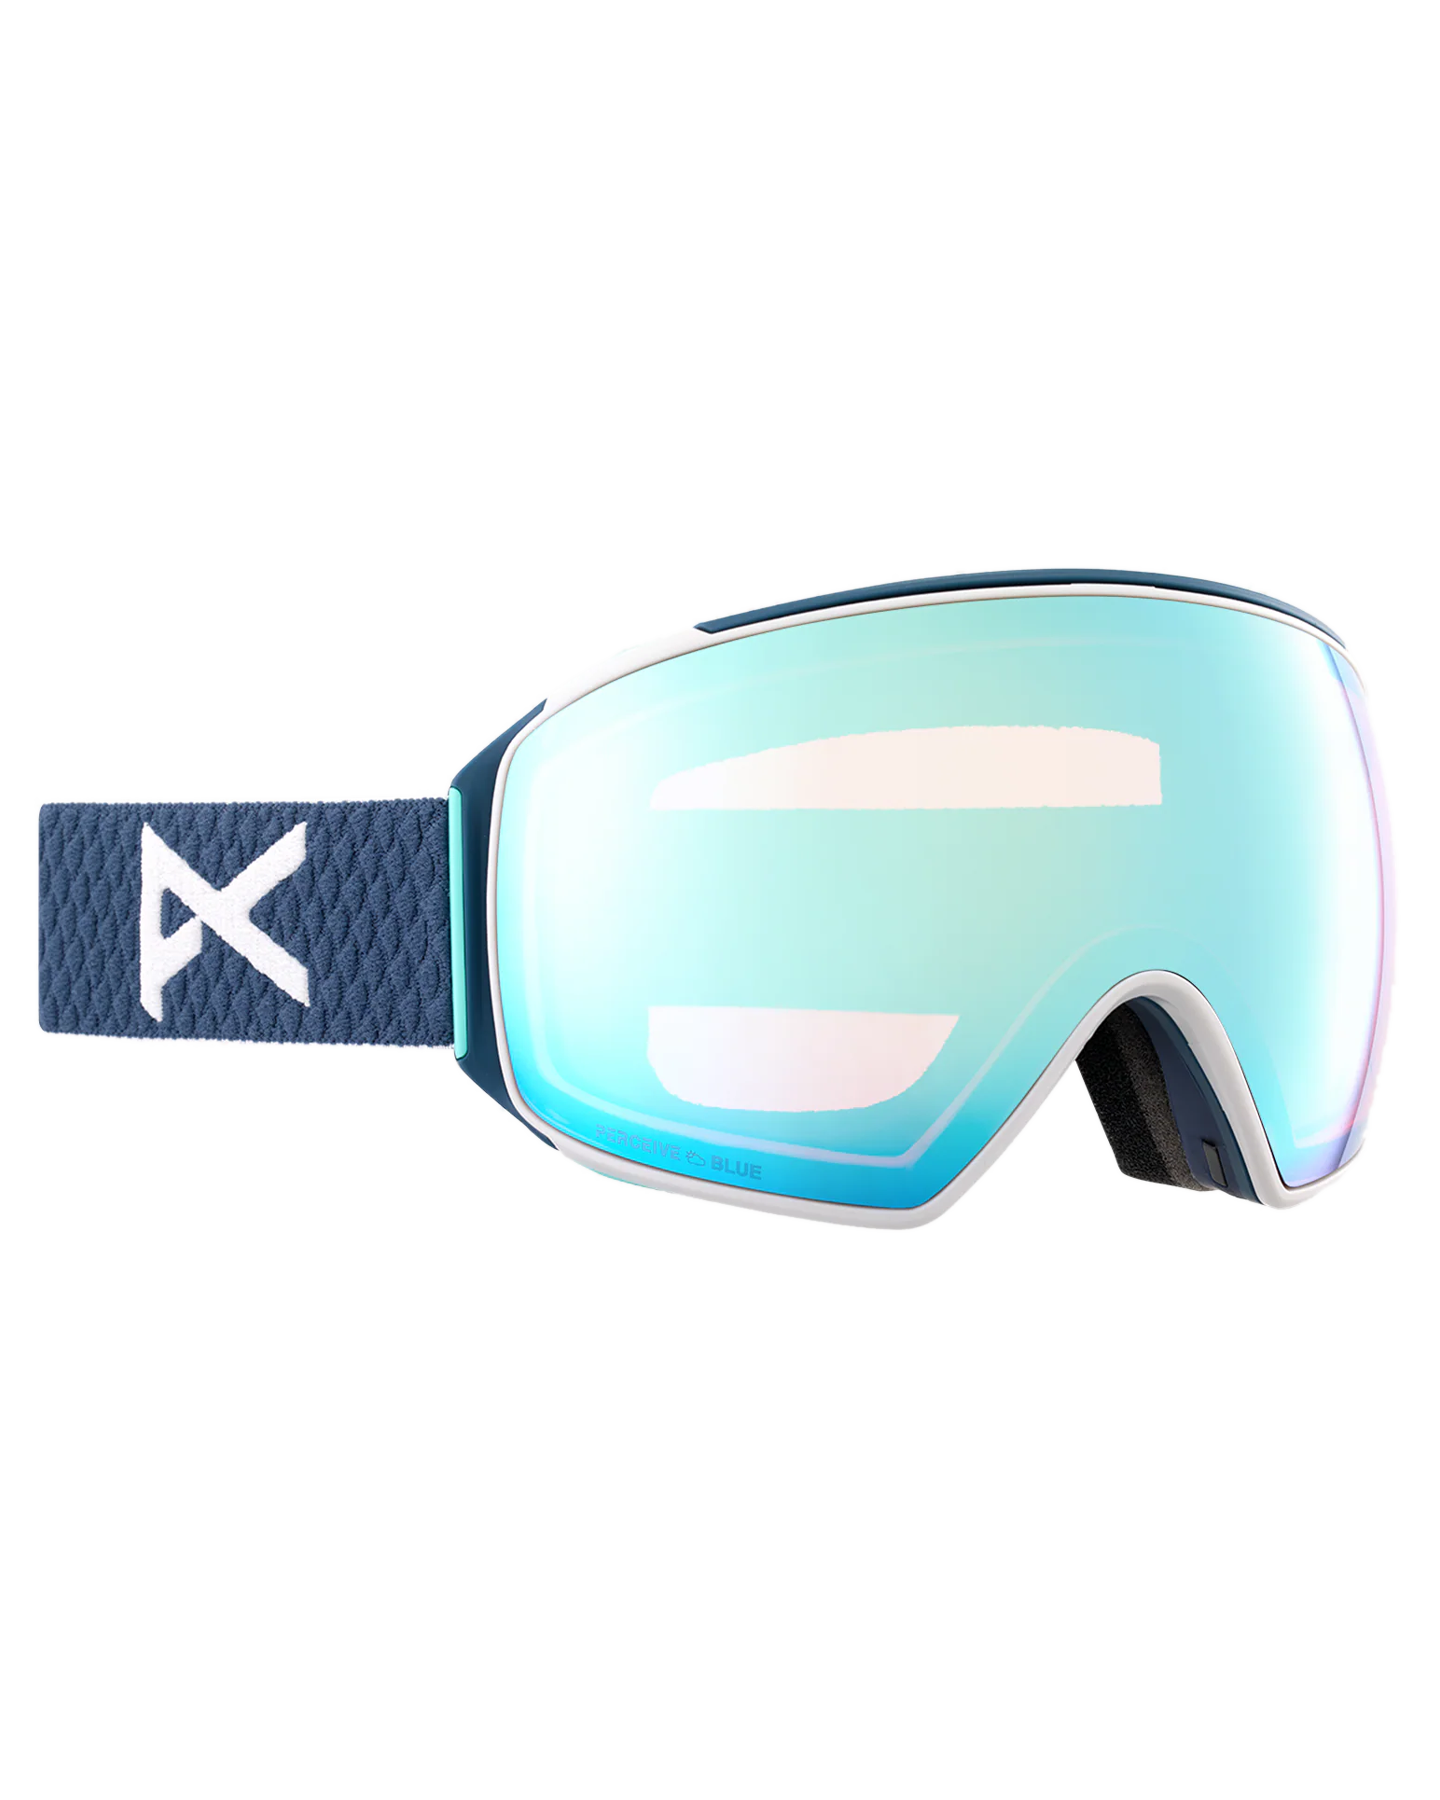 Anon M4 Toric Snow Goggles + Bonus Lens + Mfi® Face Mask - Nightfall/Perceive Variable Blue Lens Men's Snow Goggles - Trojan Wake Ski Snow